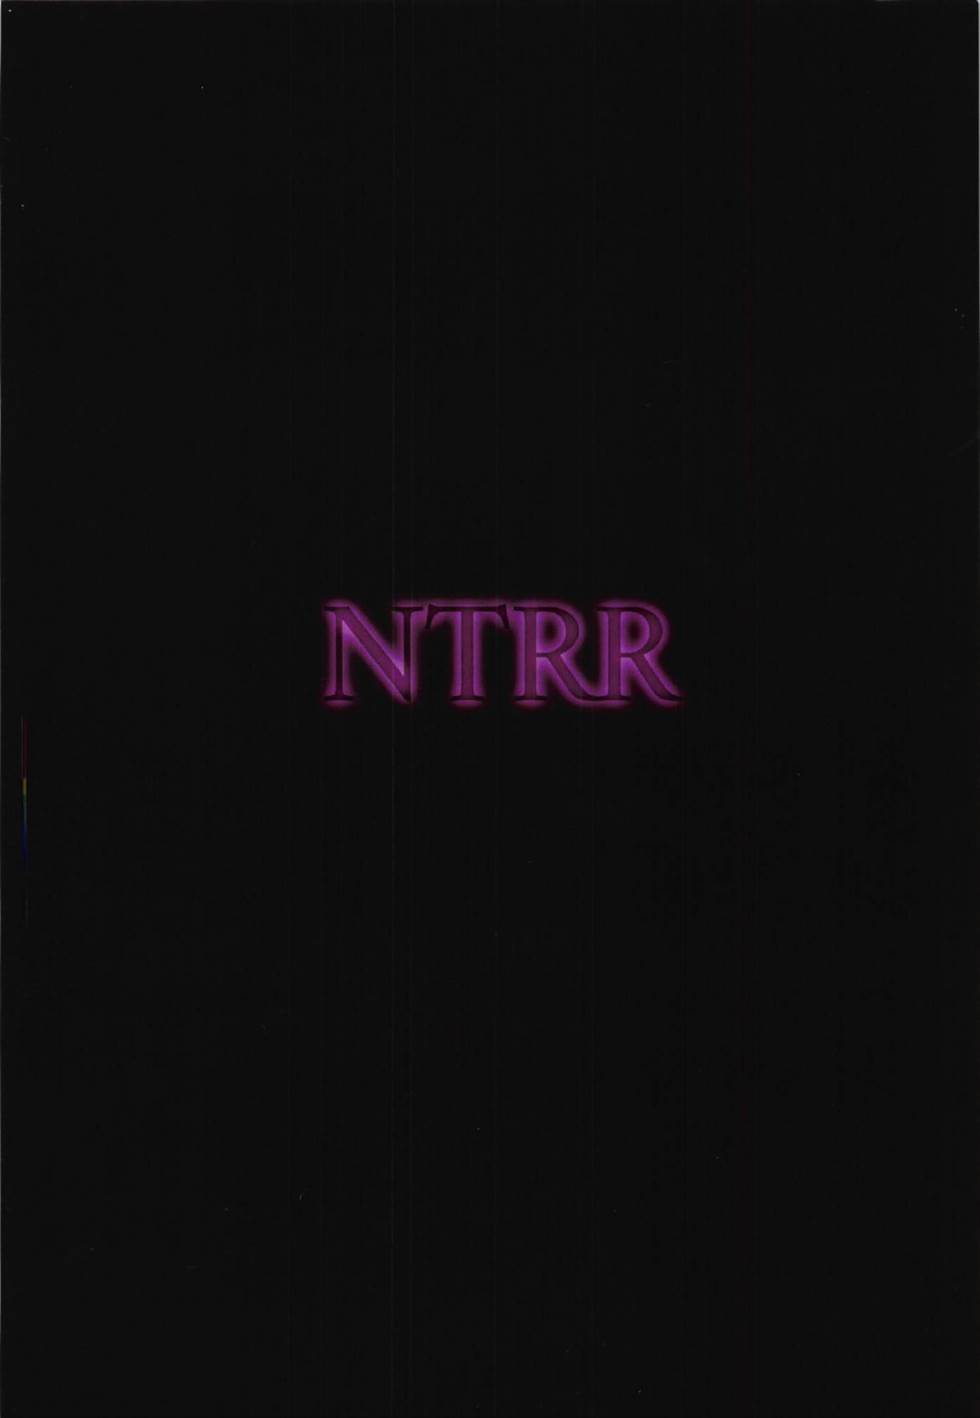 NTRR